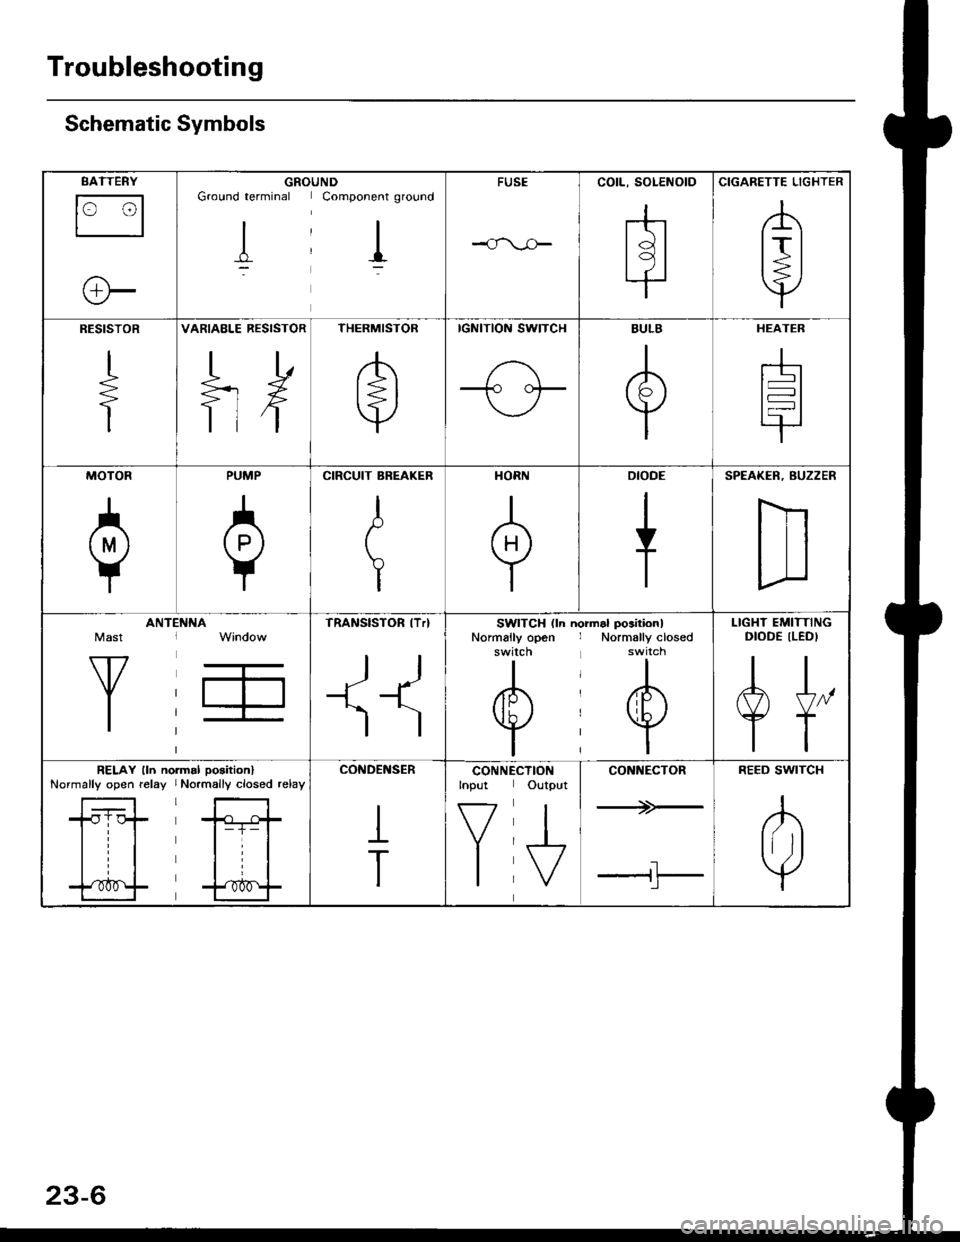 HONDA CIVIC 1997 6.G Workshop Manual Troubleshooting
Schematic Symbols
BATTERY
E
@
GROGroLrnd terminal
II_d:
UNDComponent ground
II_..-
FUSE
--cn-.e
COIL, SOLENOID
r{r
tql|
CIGARETTE LIGHTER
A
lrl
P
RESISTOR
I
f
VARIAELE RESISTOR
ilH
T